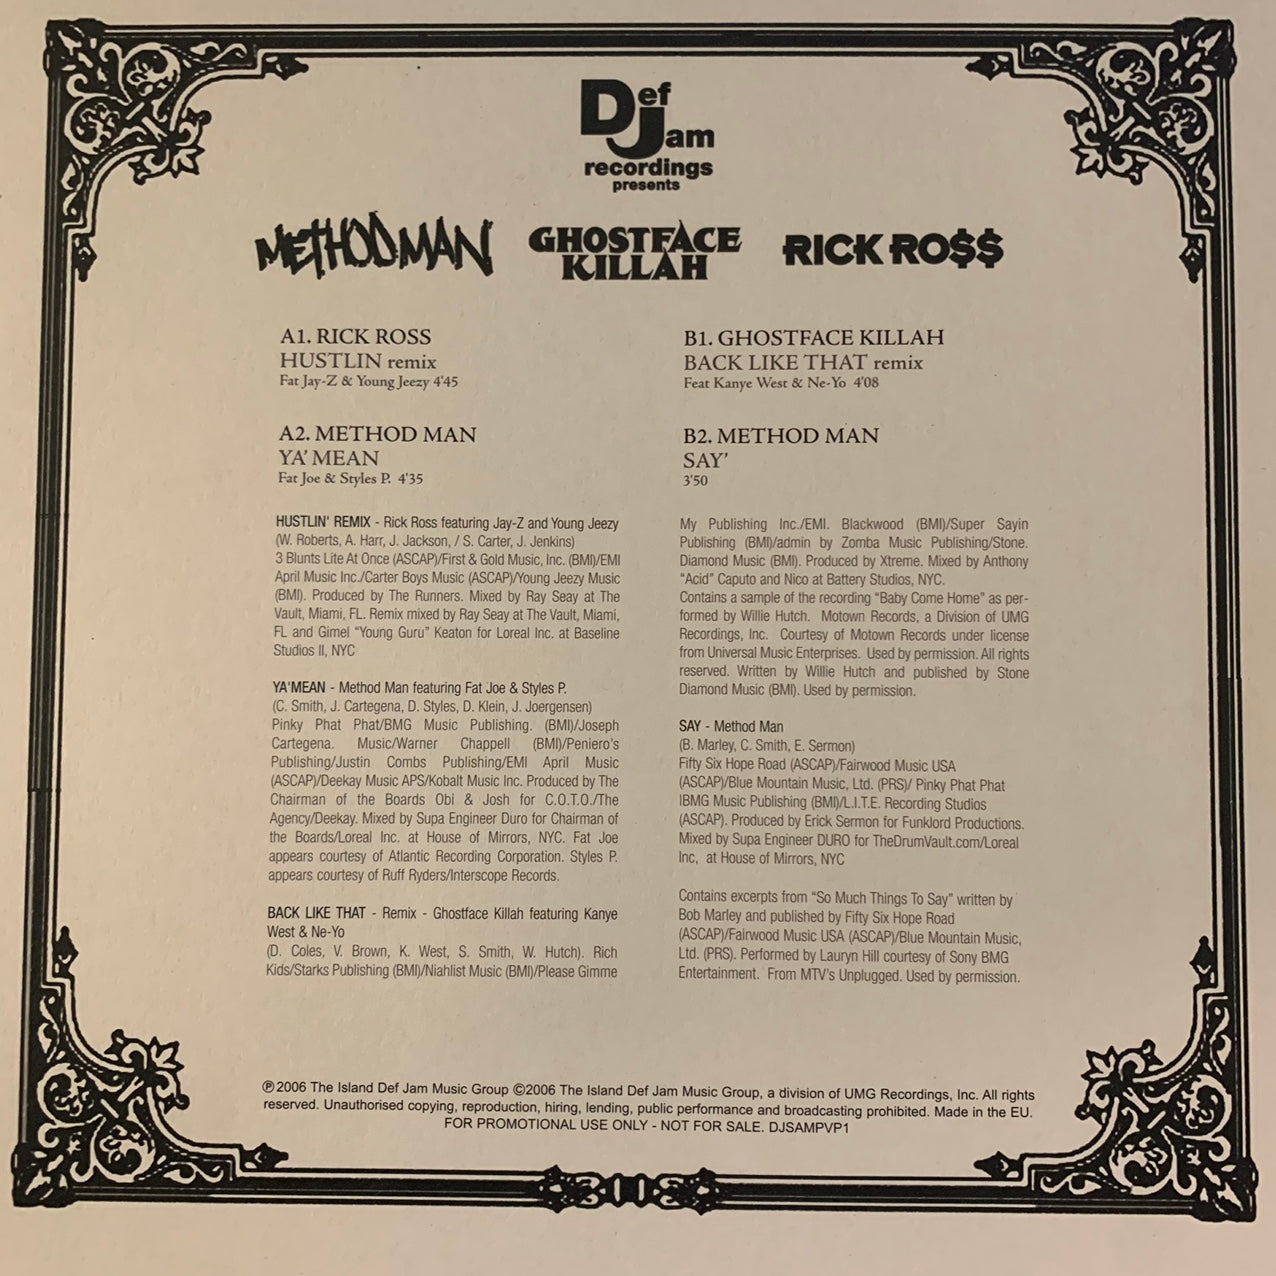 Def Jam Recordings Presents Ghostface Killah, Rick Ross and The Method Man 4 Track 12inch Vinyl